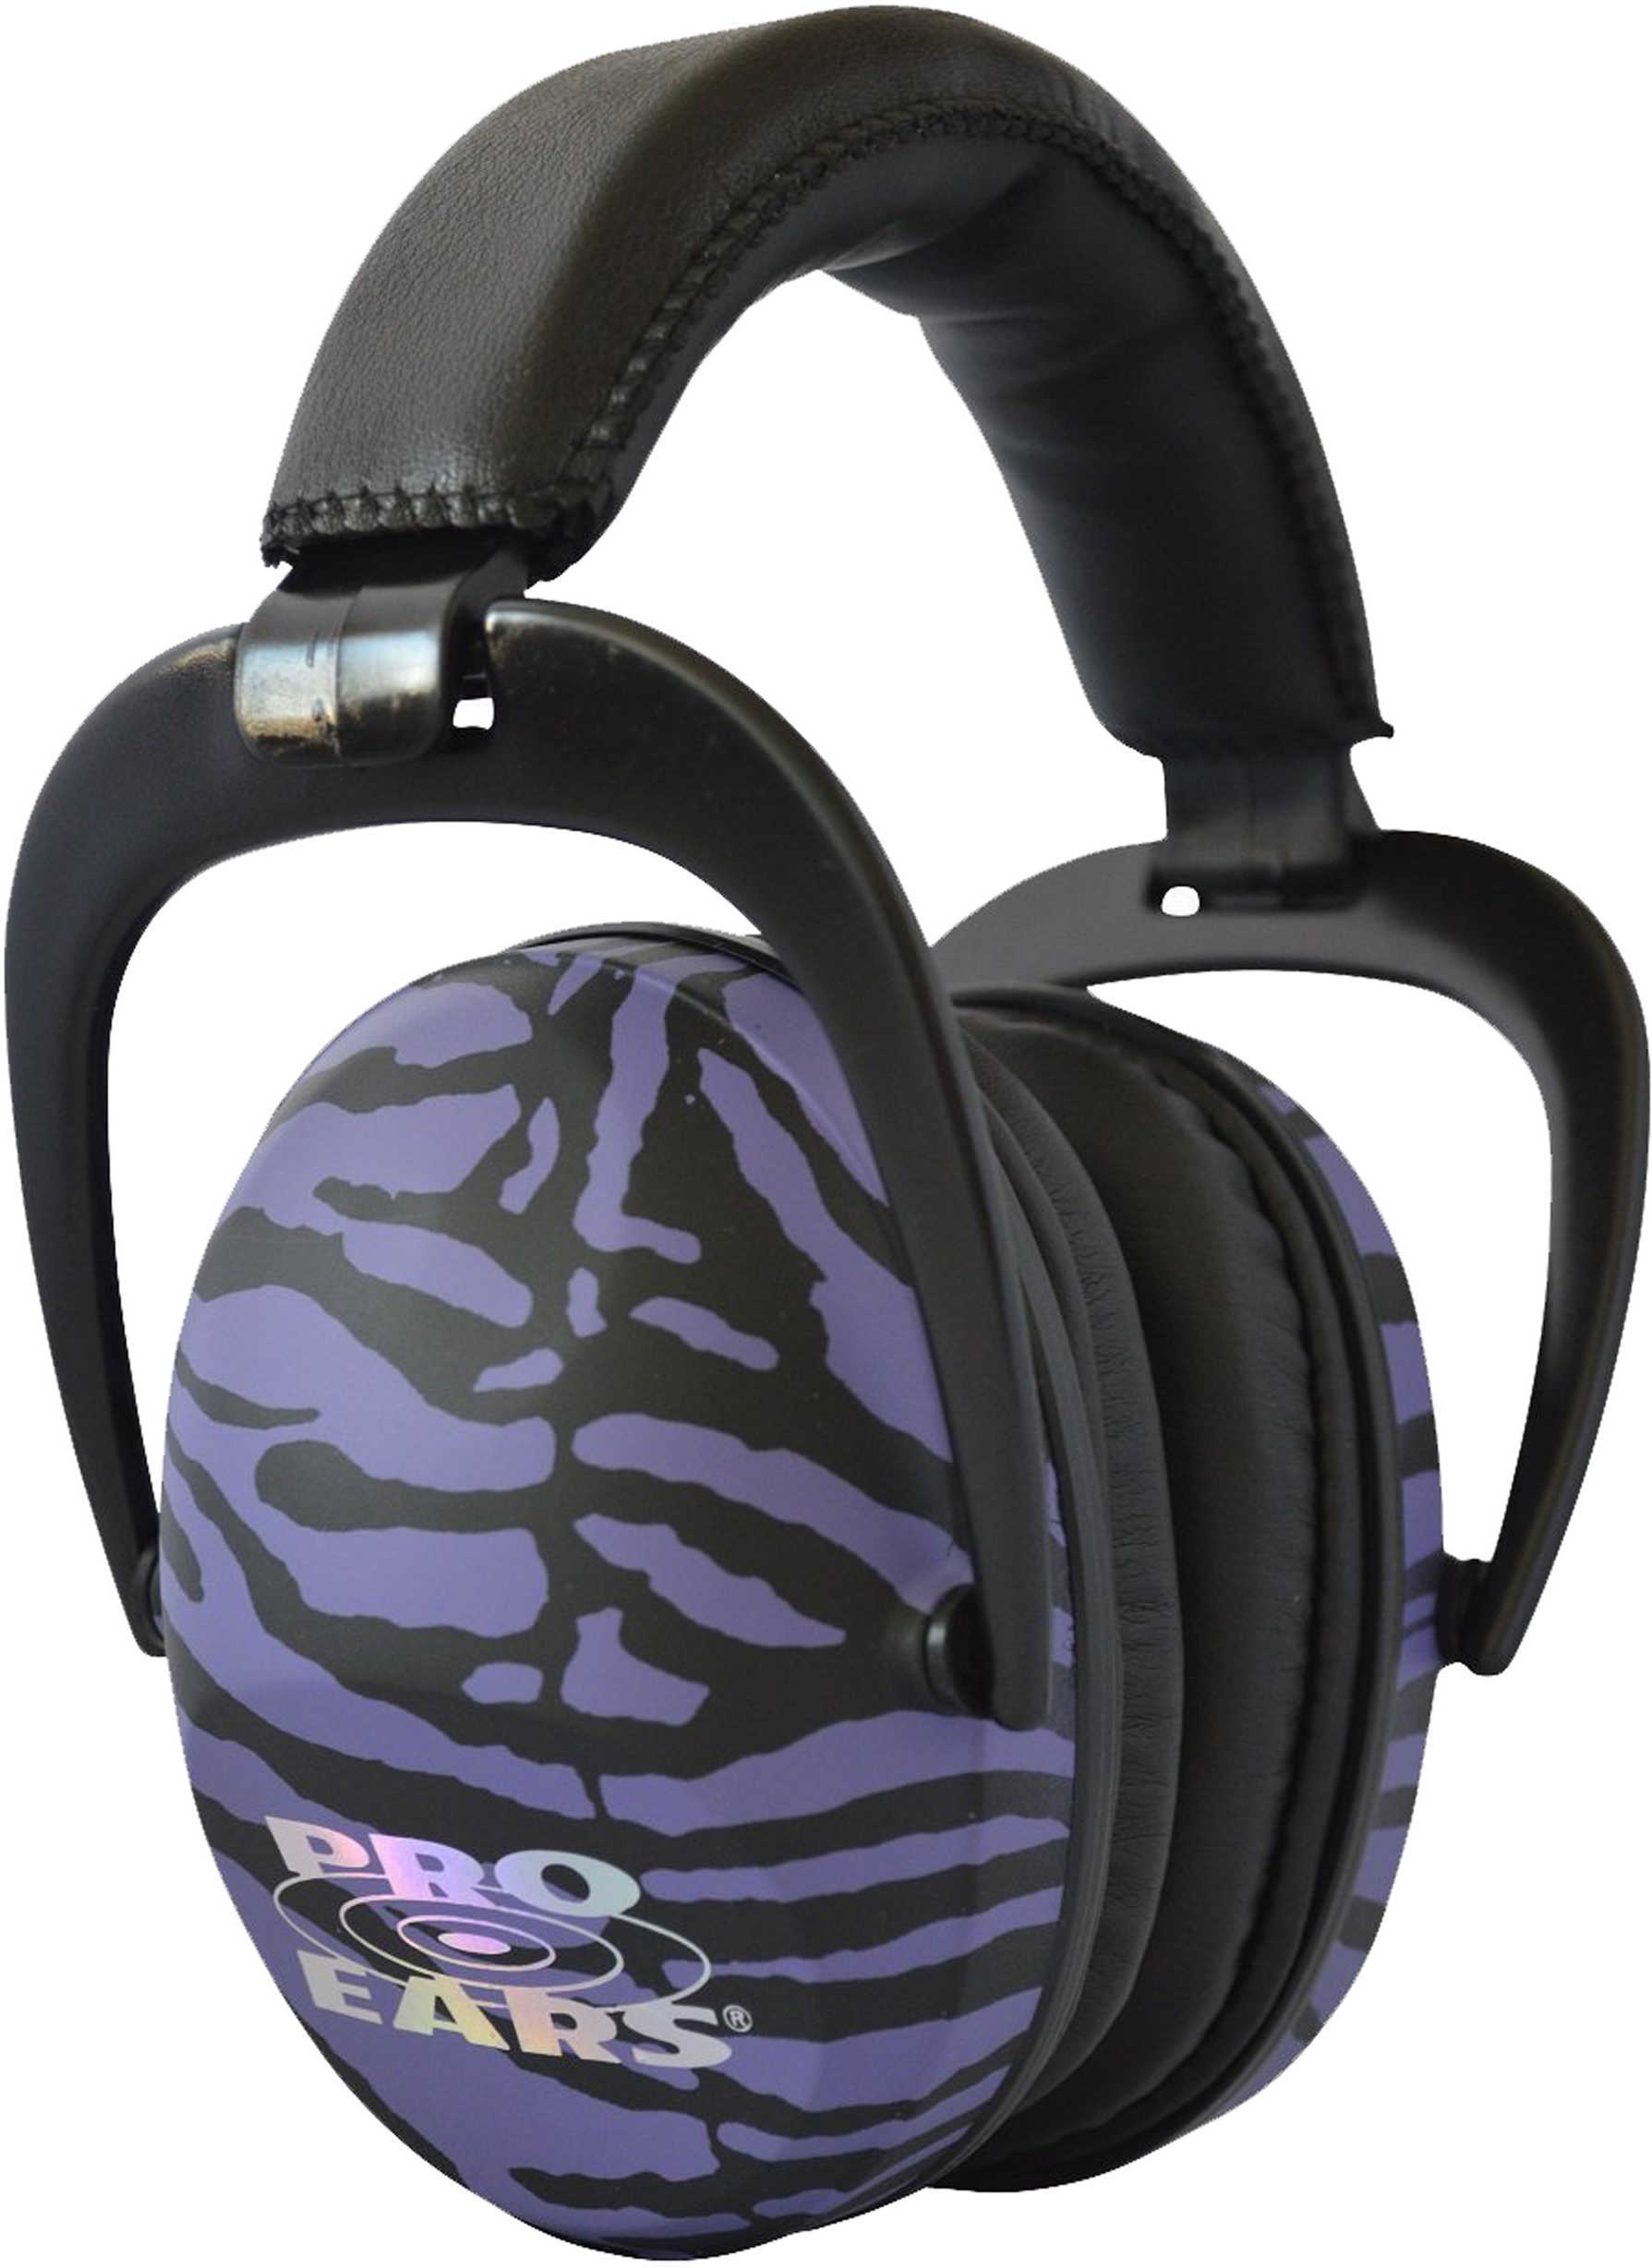 Pro Ears Ultra Sleek Noise Reduction Rating 26dB, Purple Zebra Md: PEUSPUZ